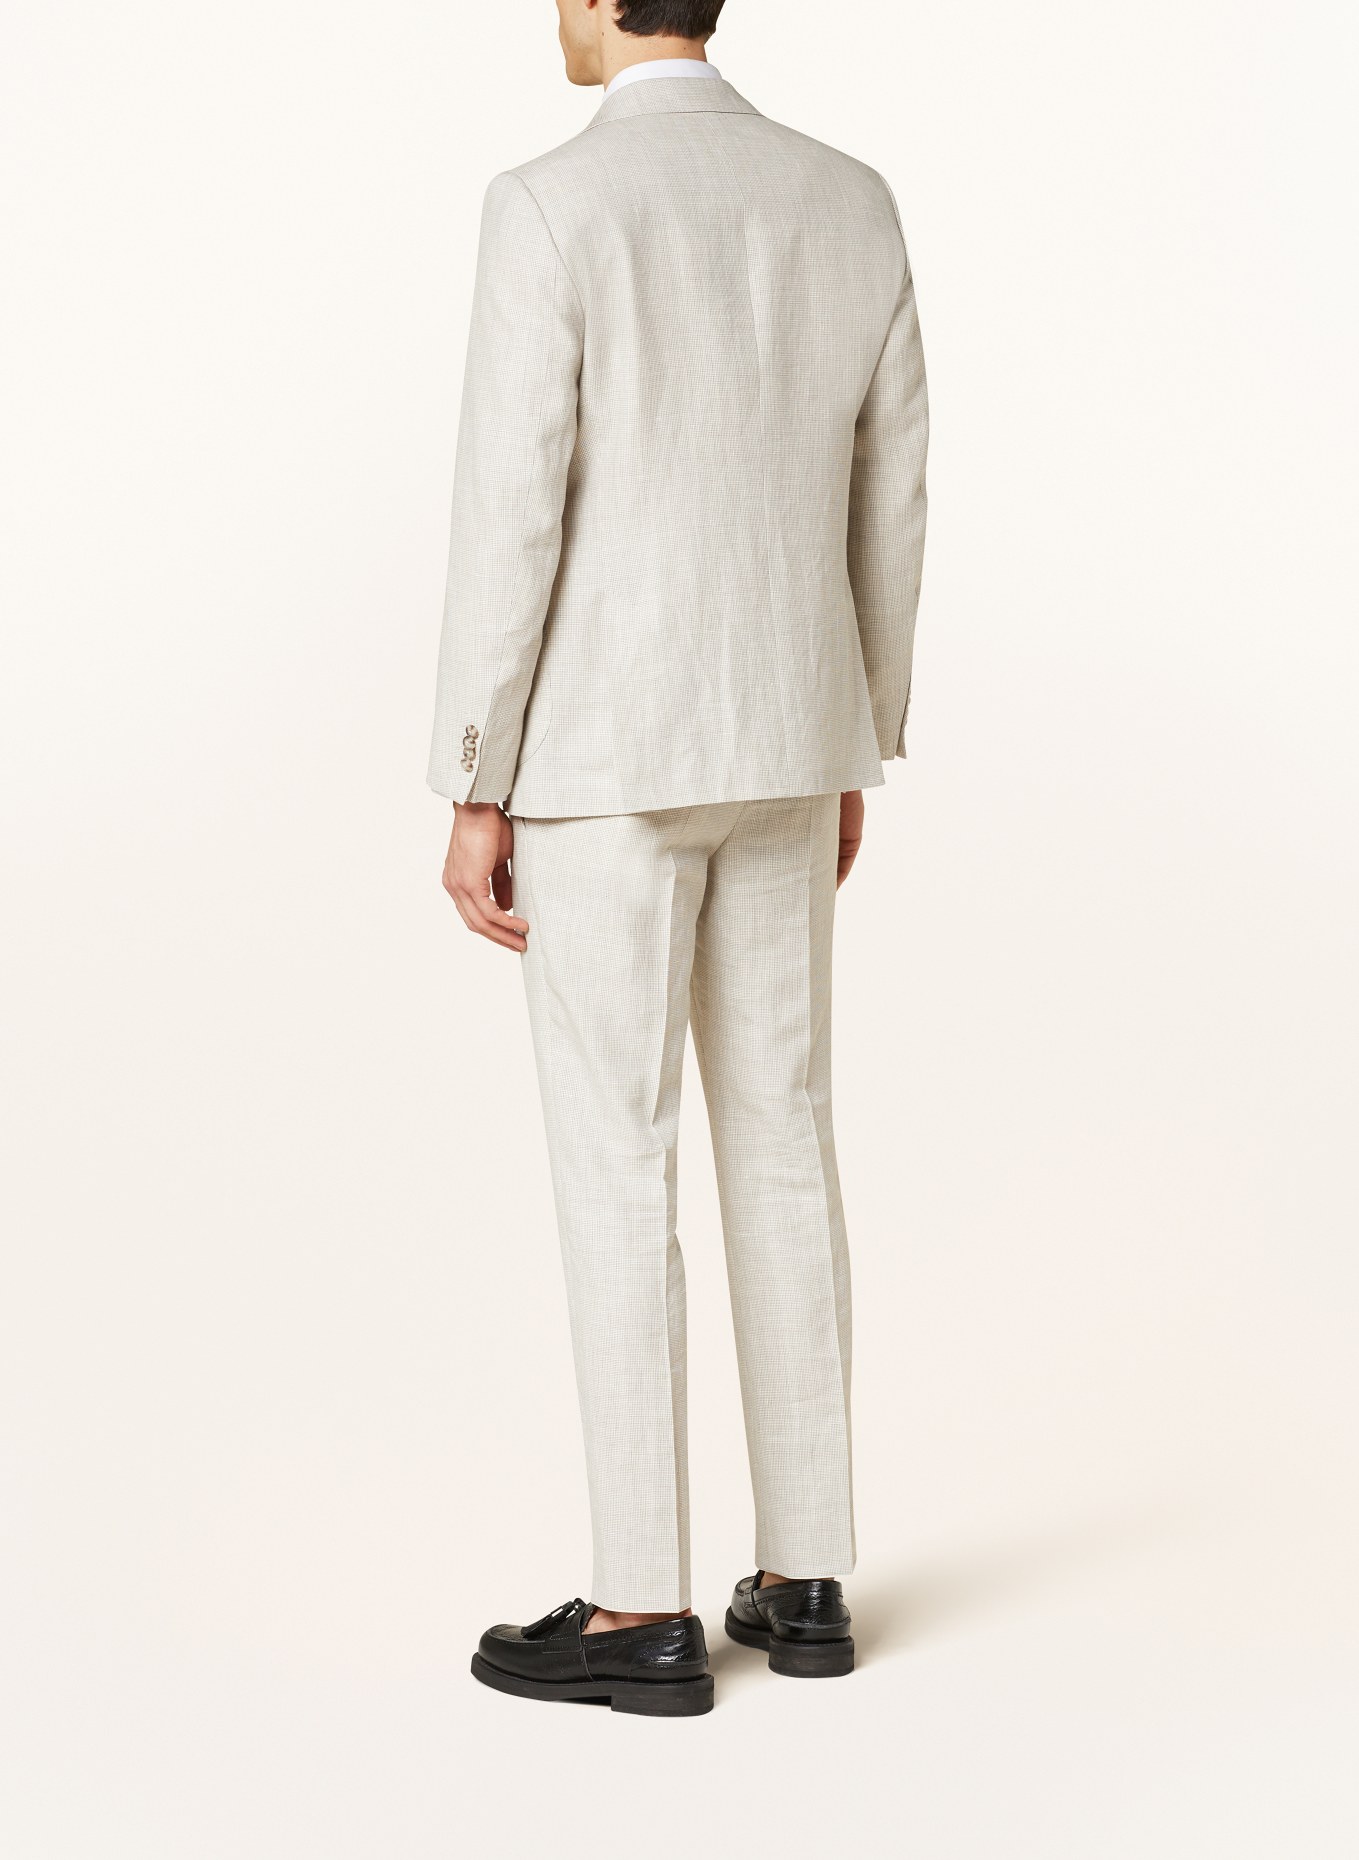 EDUARD DRESSLER Suit jacket MATTEO comfort fit with linen, Color: 070 BEIGE (Image 3)